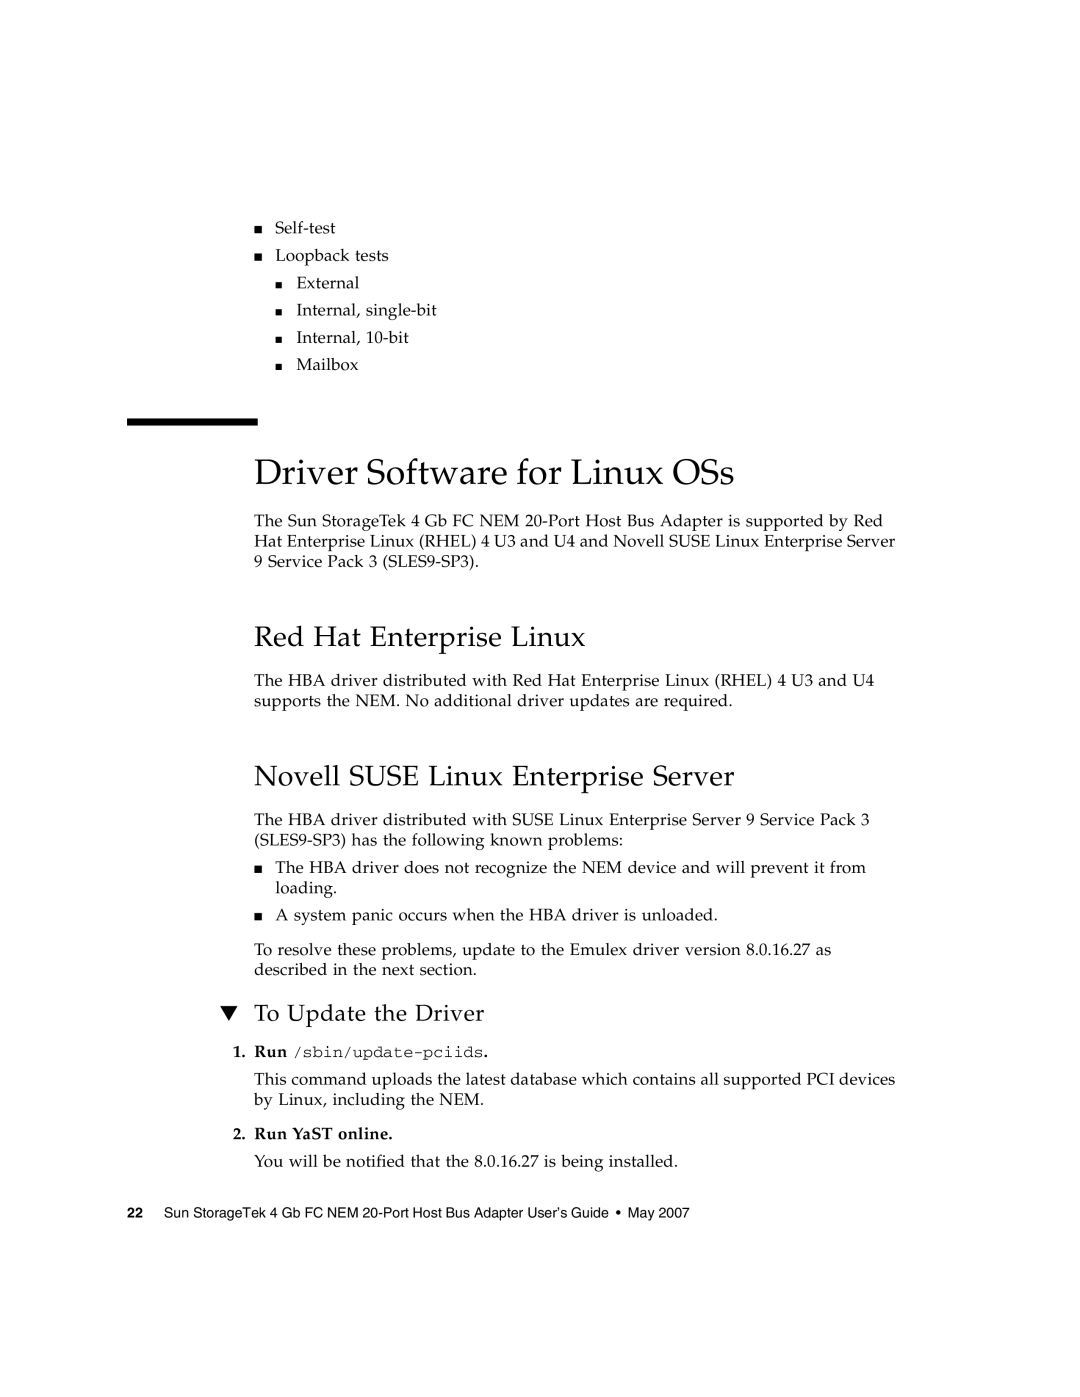 Sun Microsystems 2.0 manual Driver Software for Linux OSs, Red Hat Enterprise Linux, Novell SUSE Linux Enterprise Server 